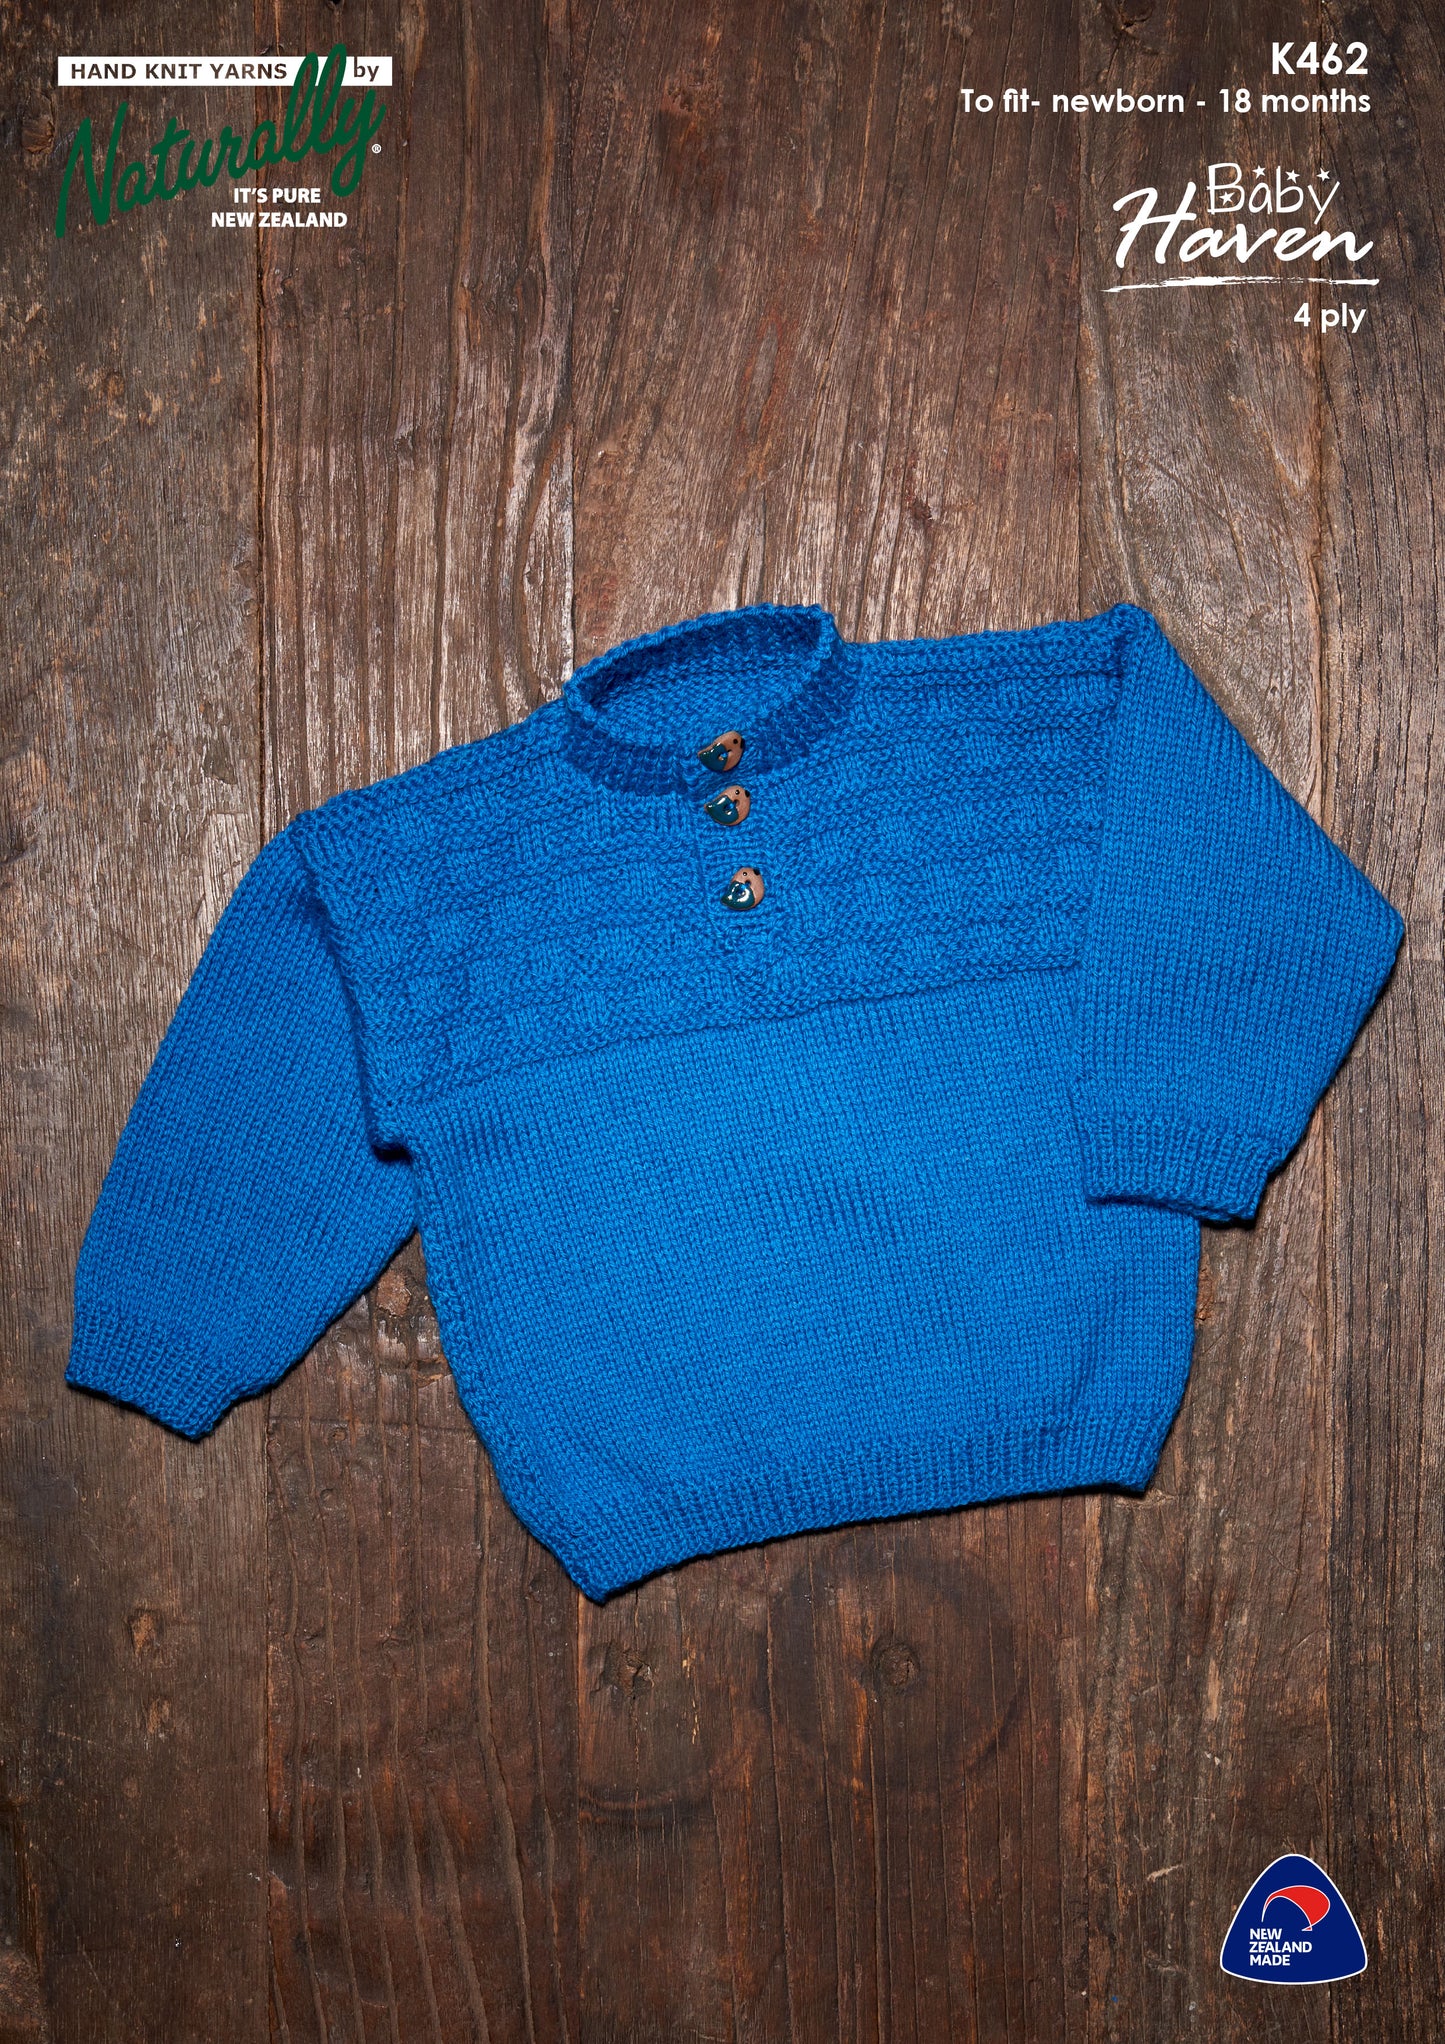 Pattern - Naturally - Newborn to 18 months - Sweater K462